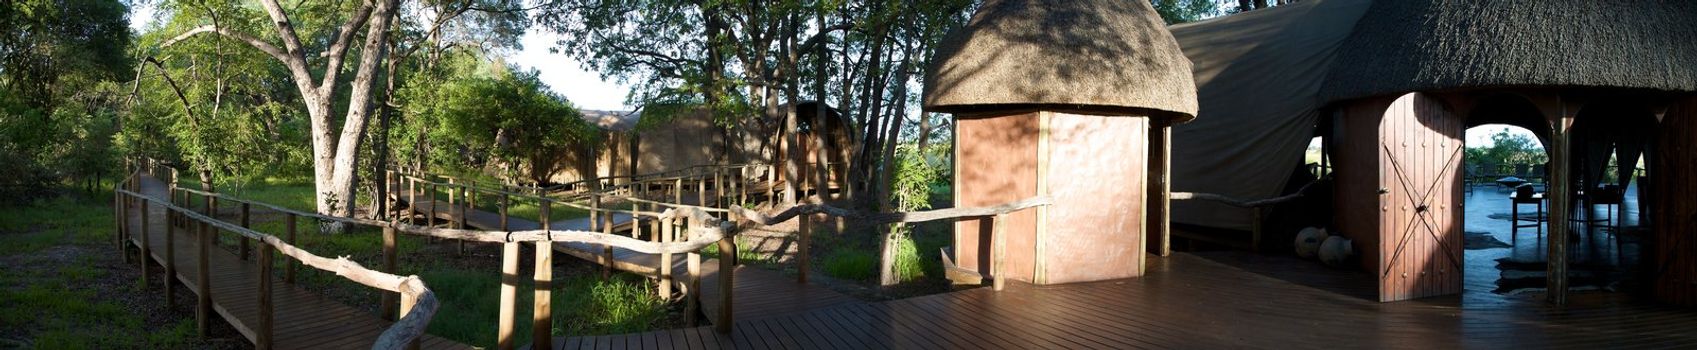 Lodge in Moremi Game Reserve - Botswana